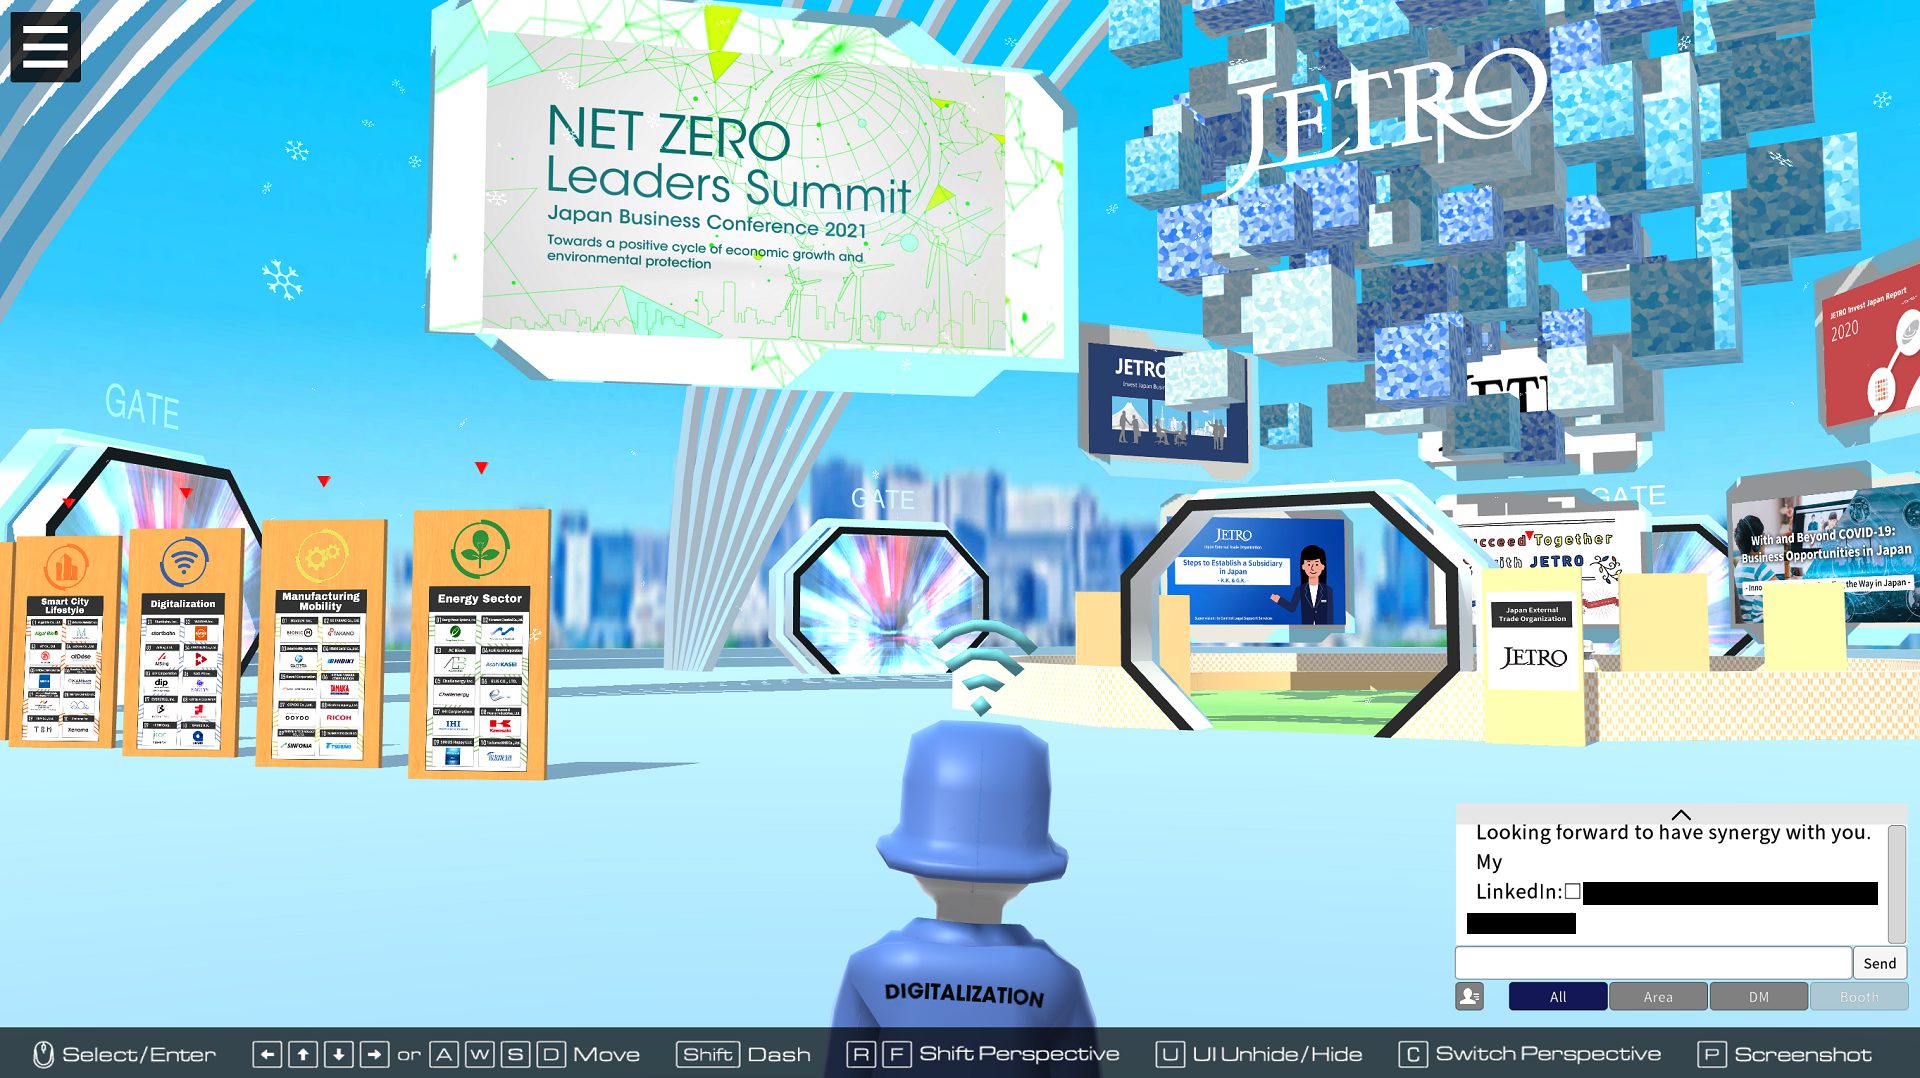 azblob://2022/11/11/eyecatch/2021-07-30-net-zero-leaders-summit-japan-business-conference-2021-report-000.jpg